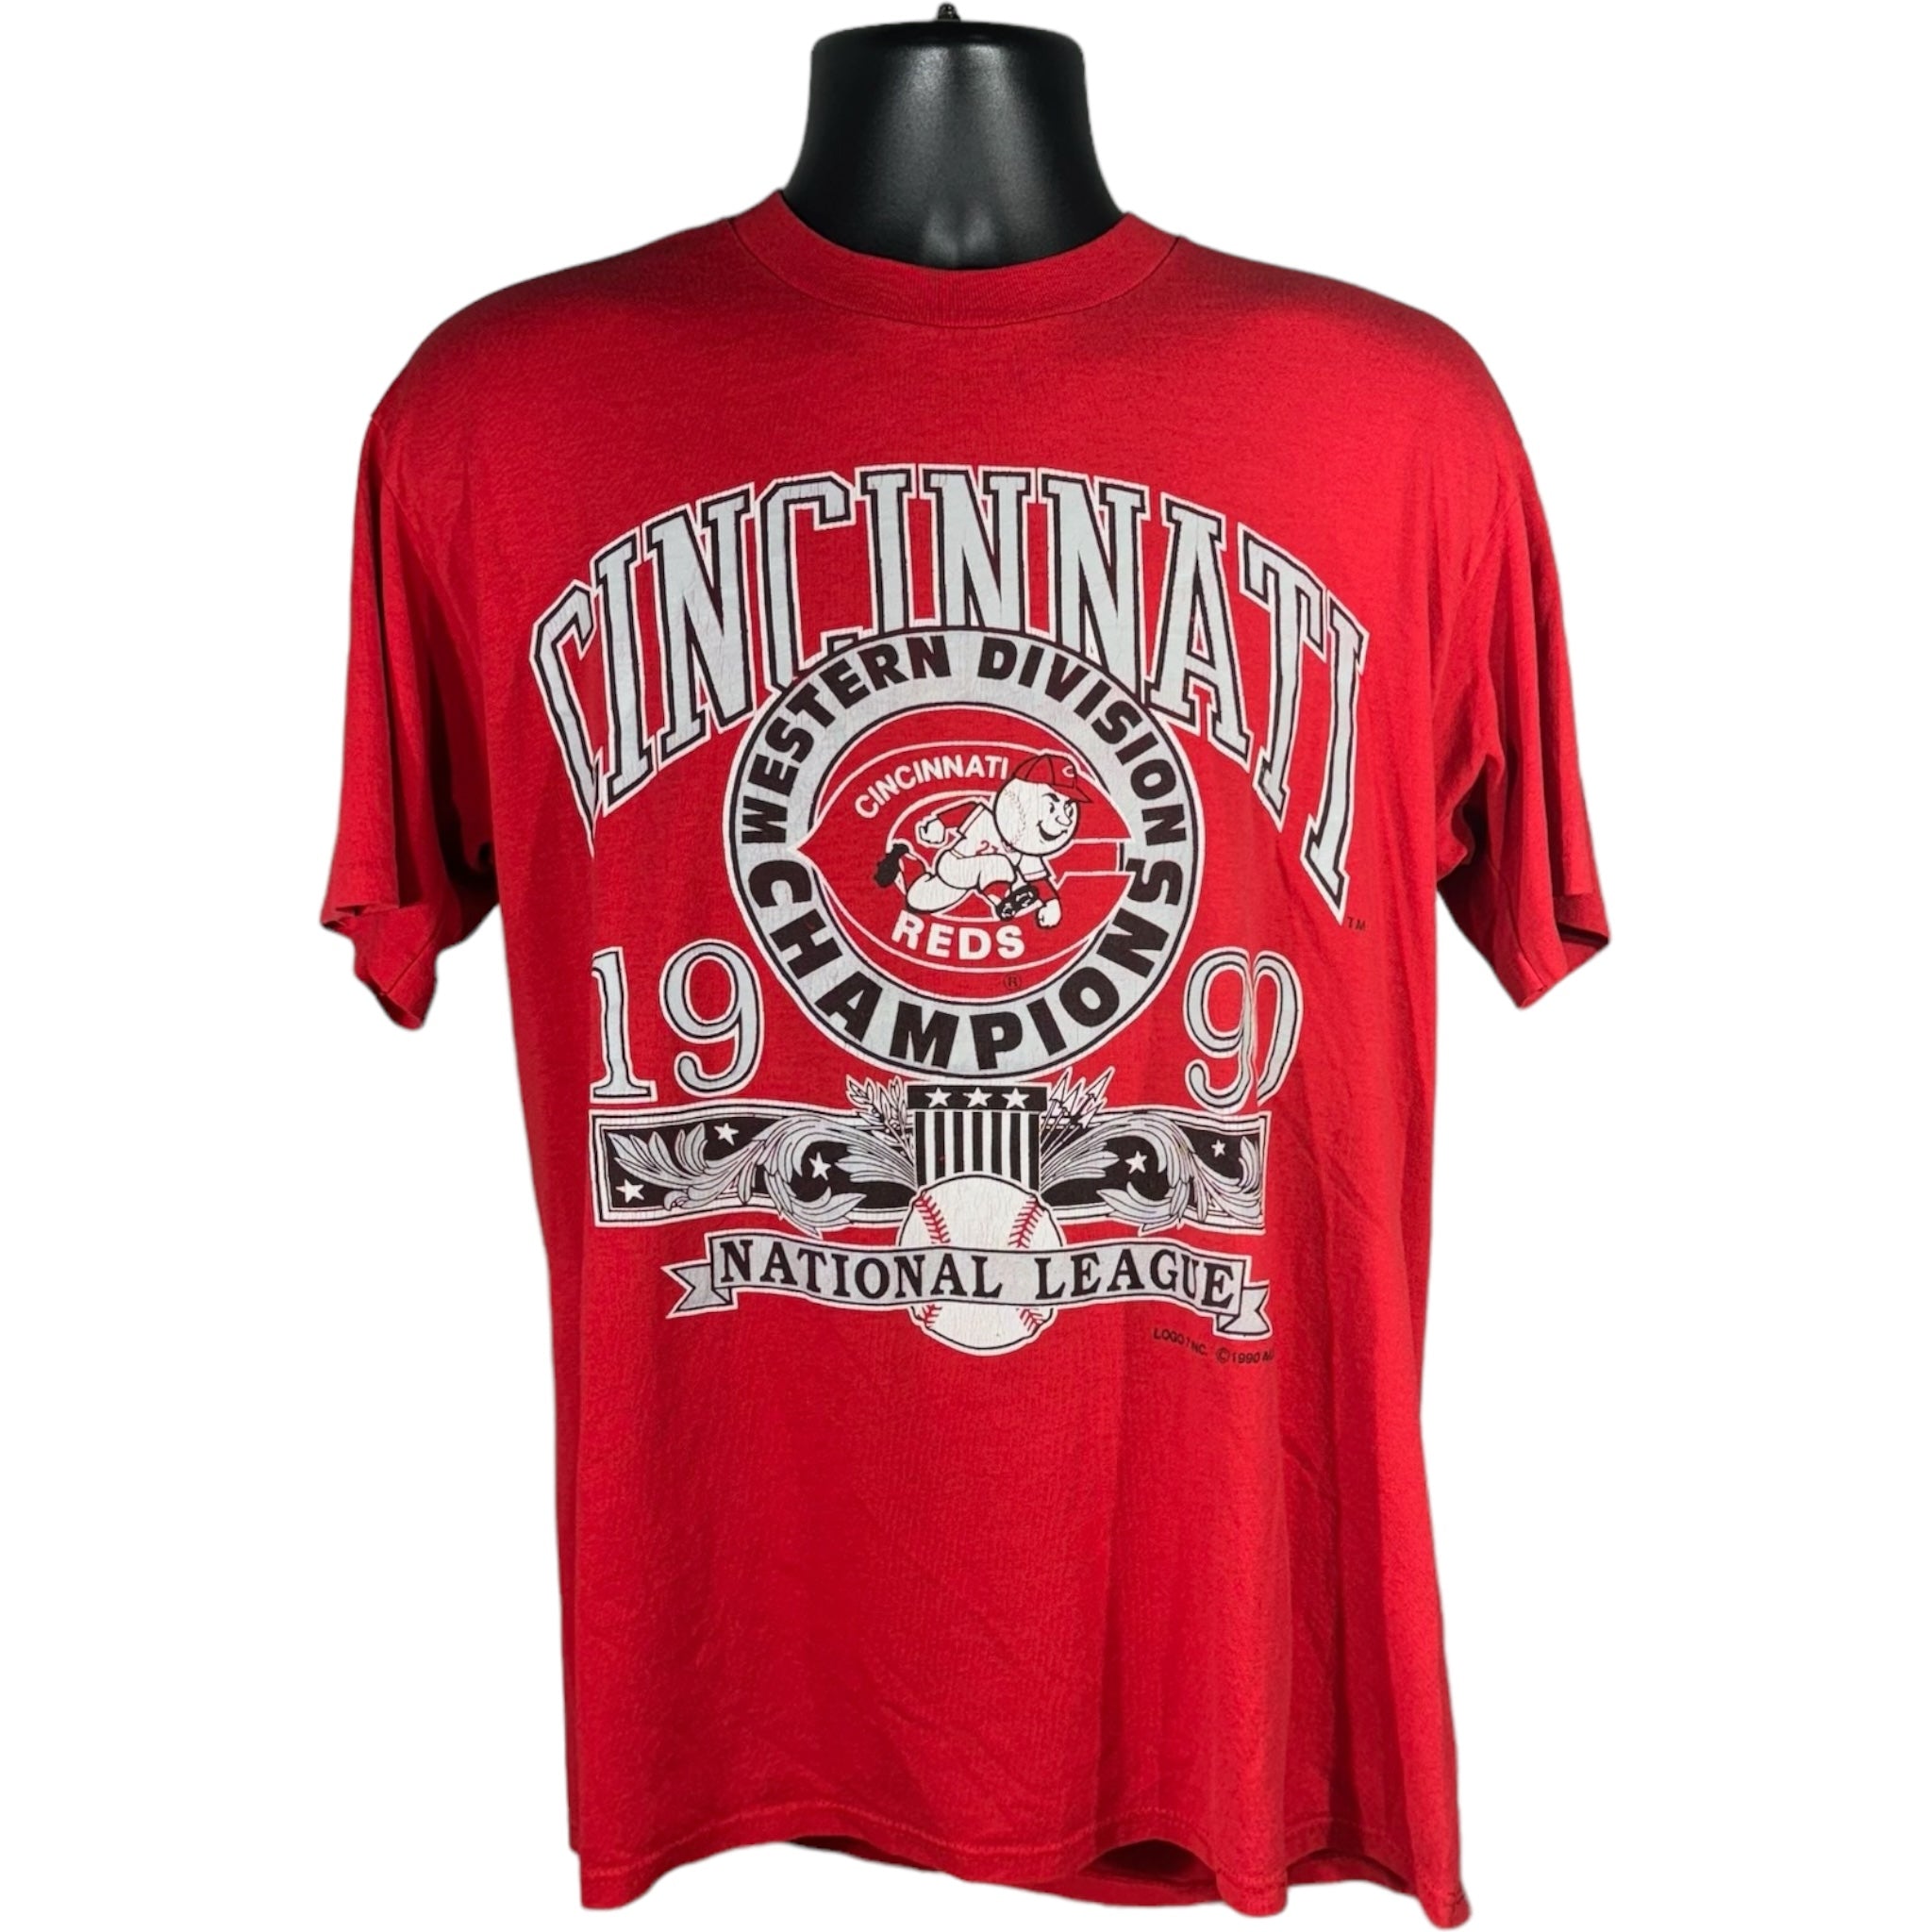 Vintage Cincinnati Baseball Western Division Champions Tee 1990